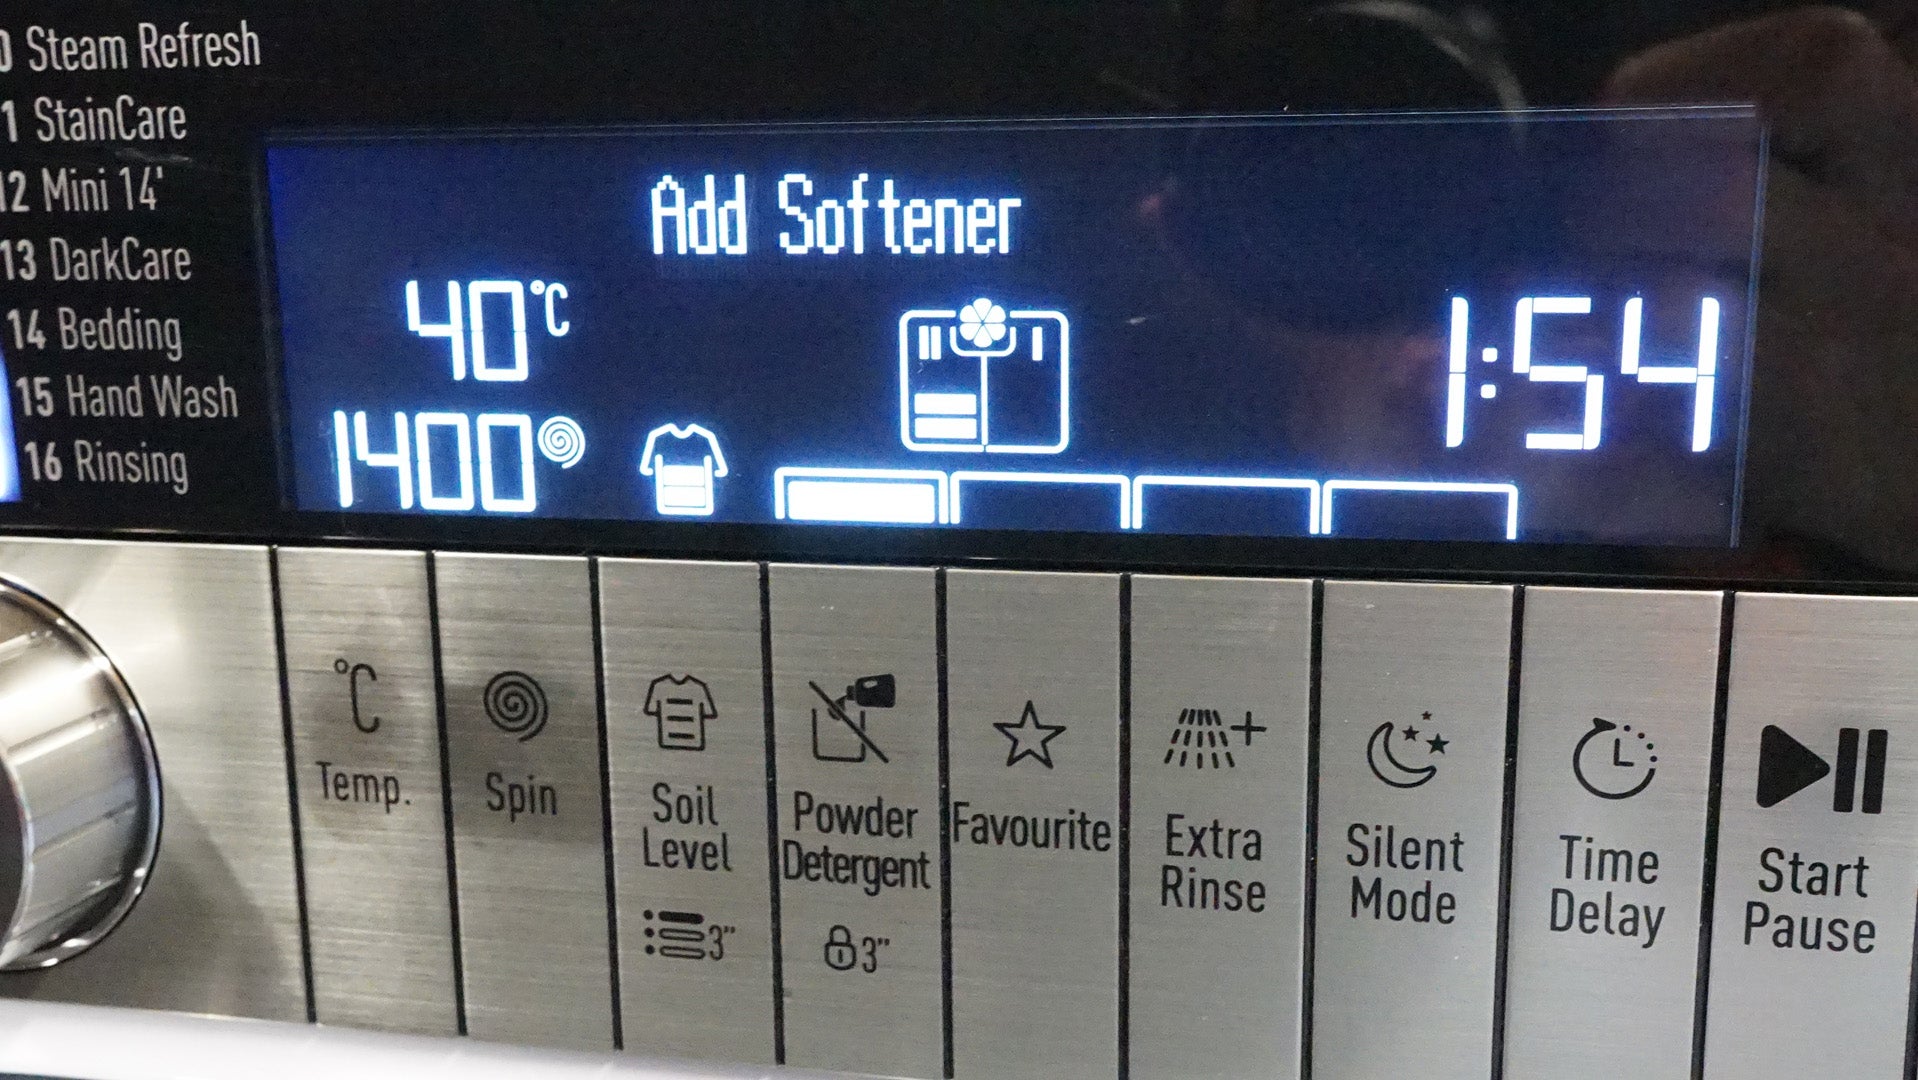 Grundig washing machine control panel and digital display.